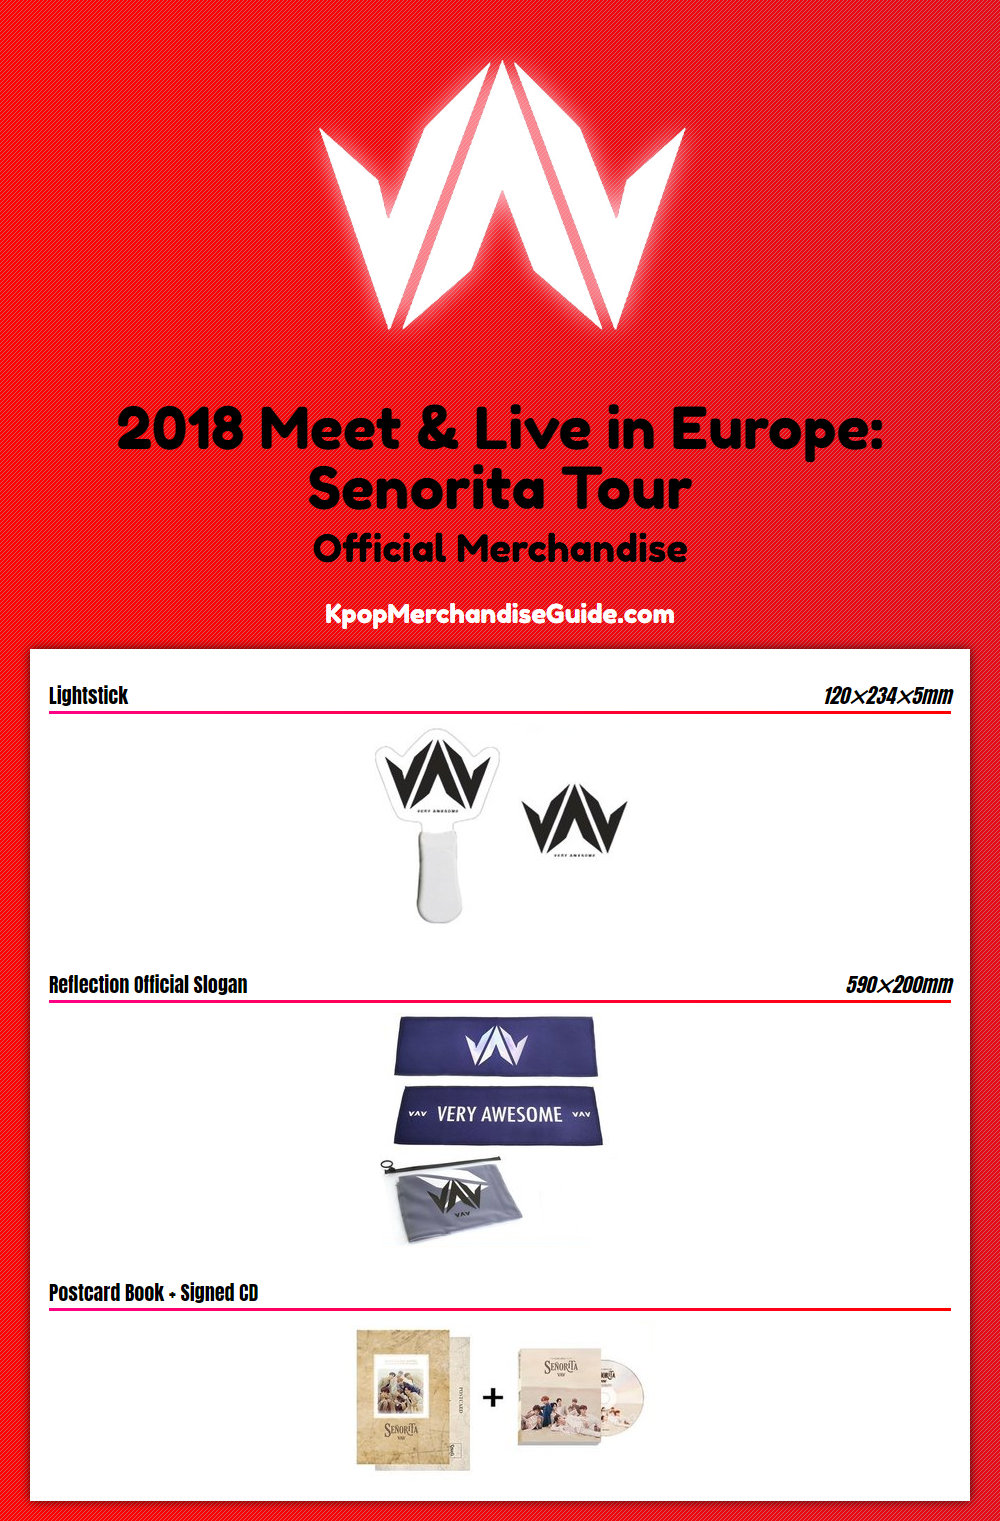 VAV 2018 Meet & Live in Europe: Senorita Tour Merchandise